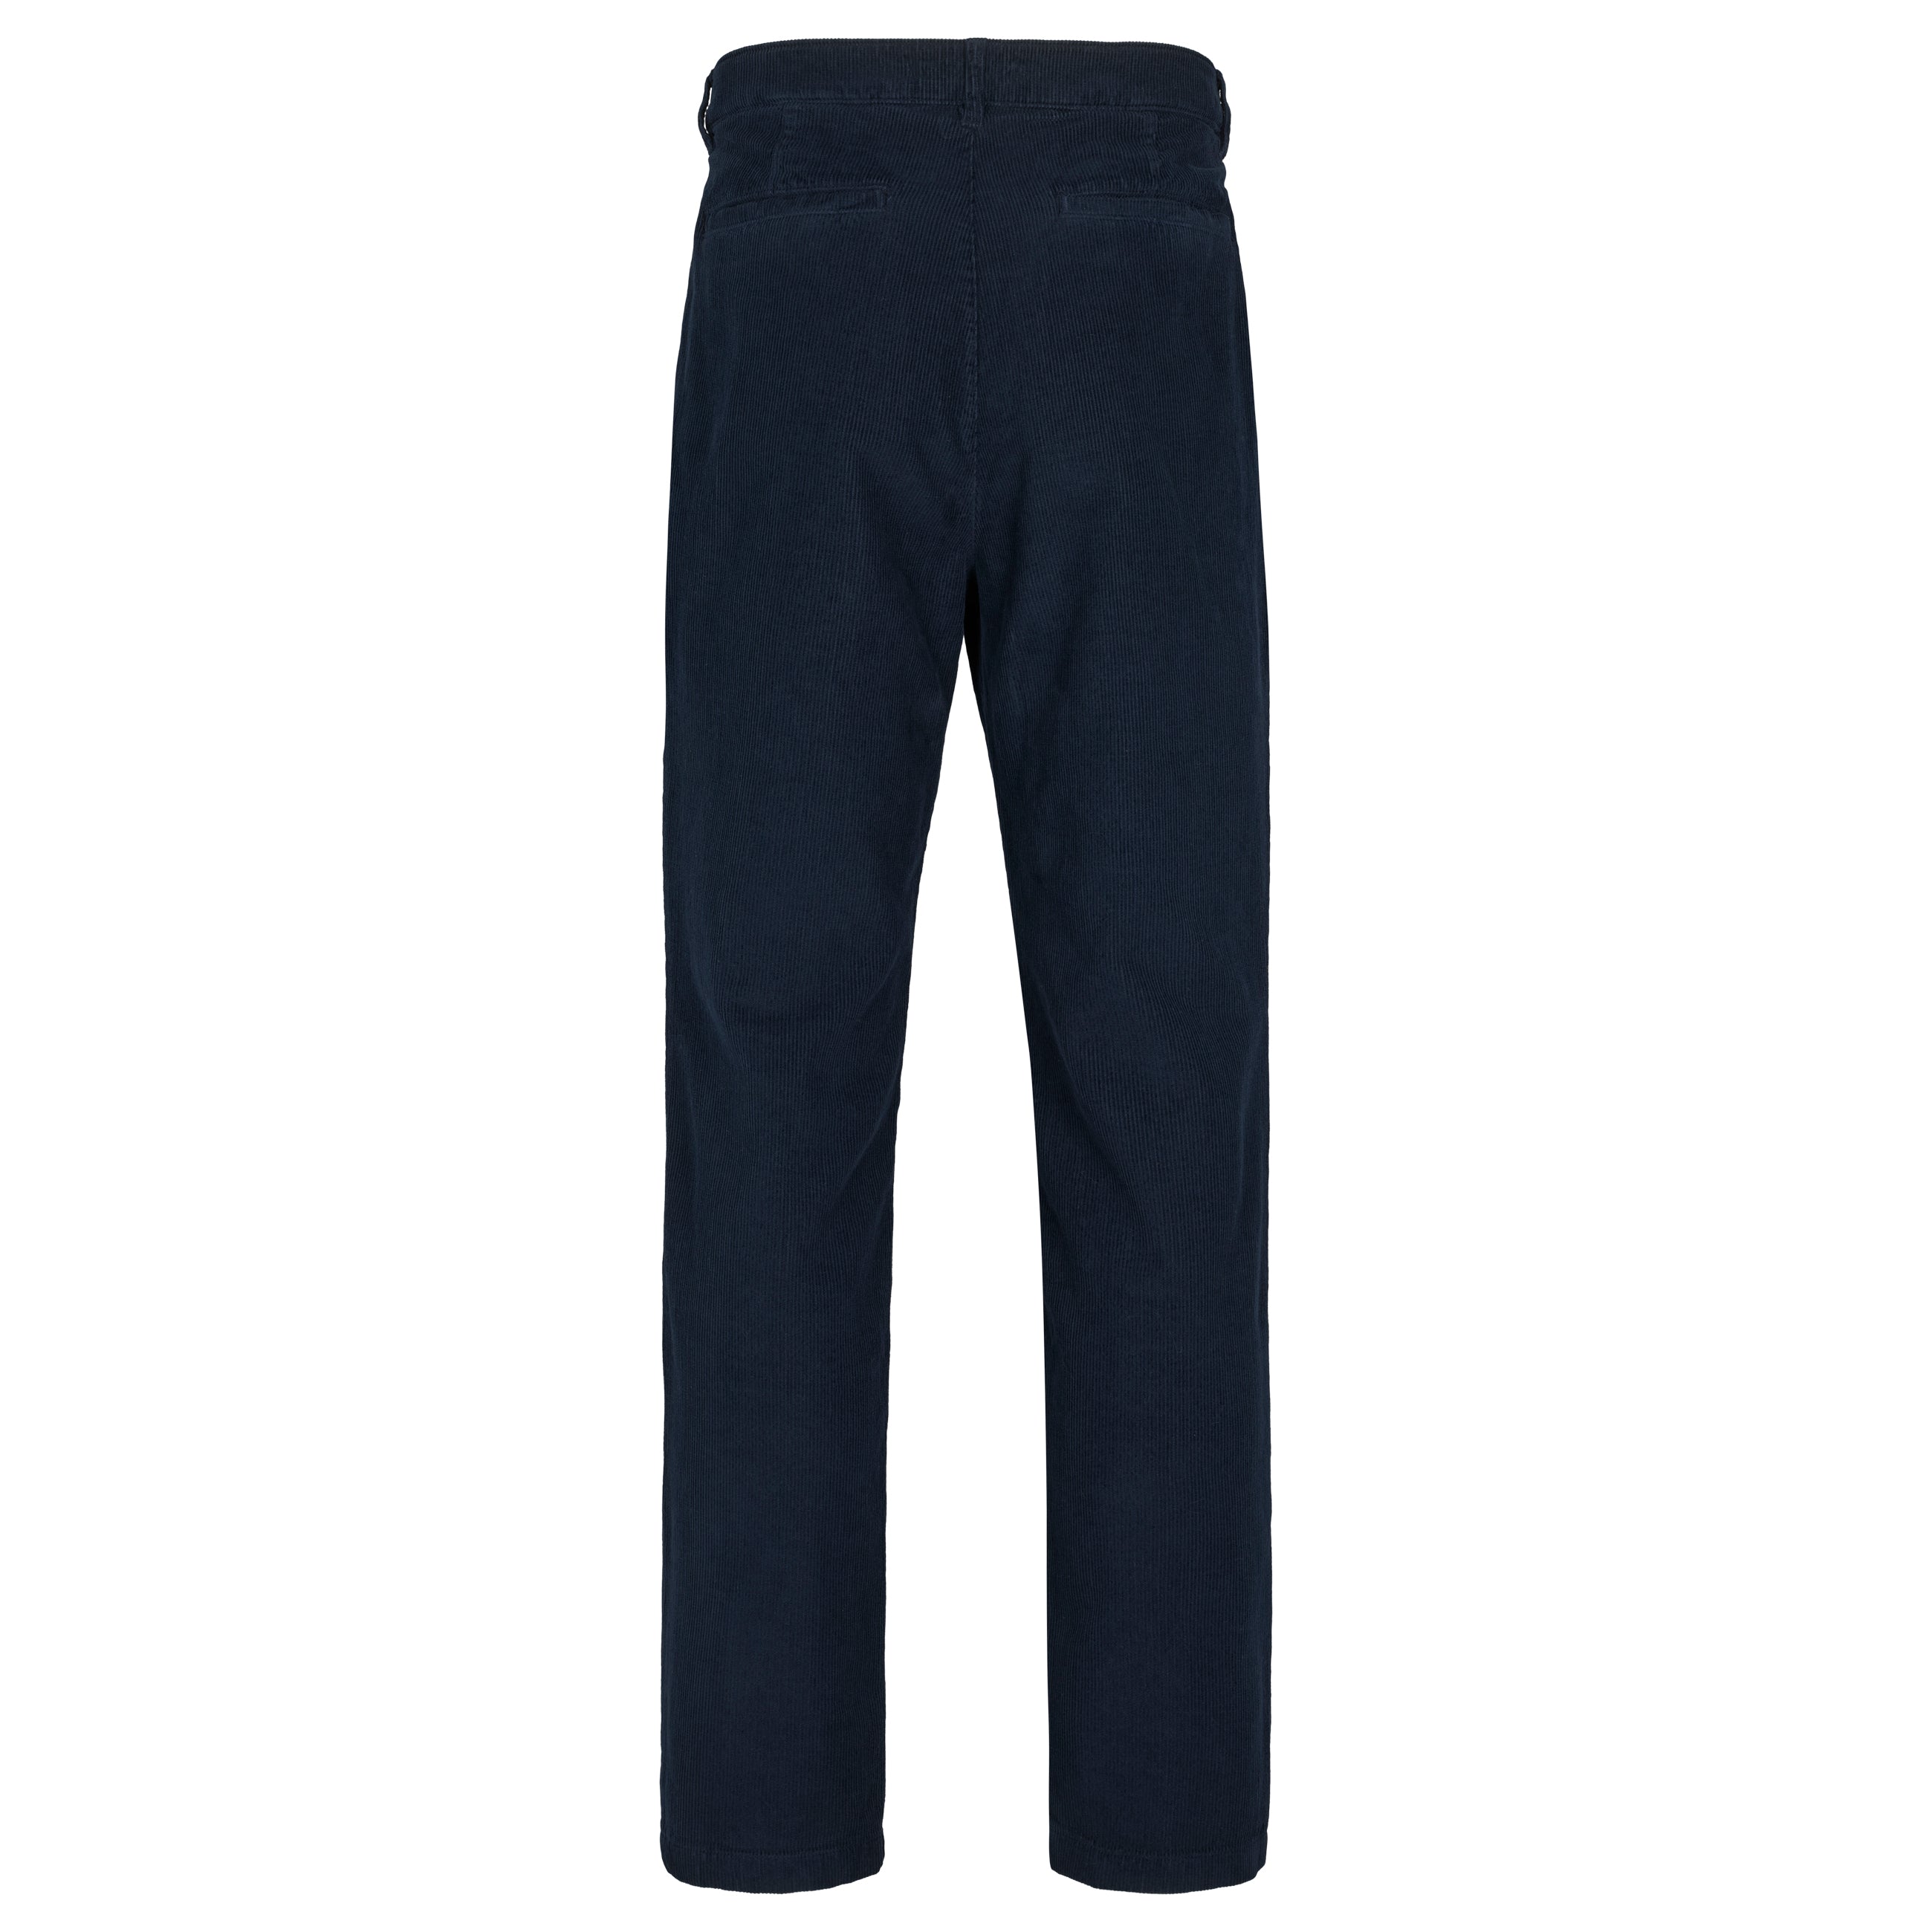 By Garment Makers uster The Organic Fine Corduroy Pants Pants 3096 Navy Blazer